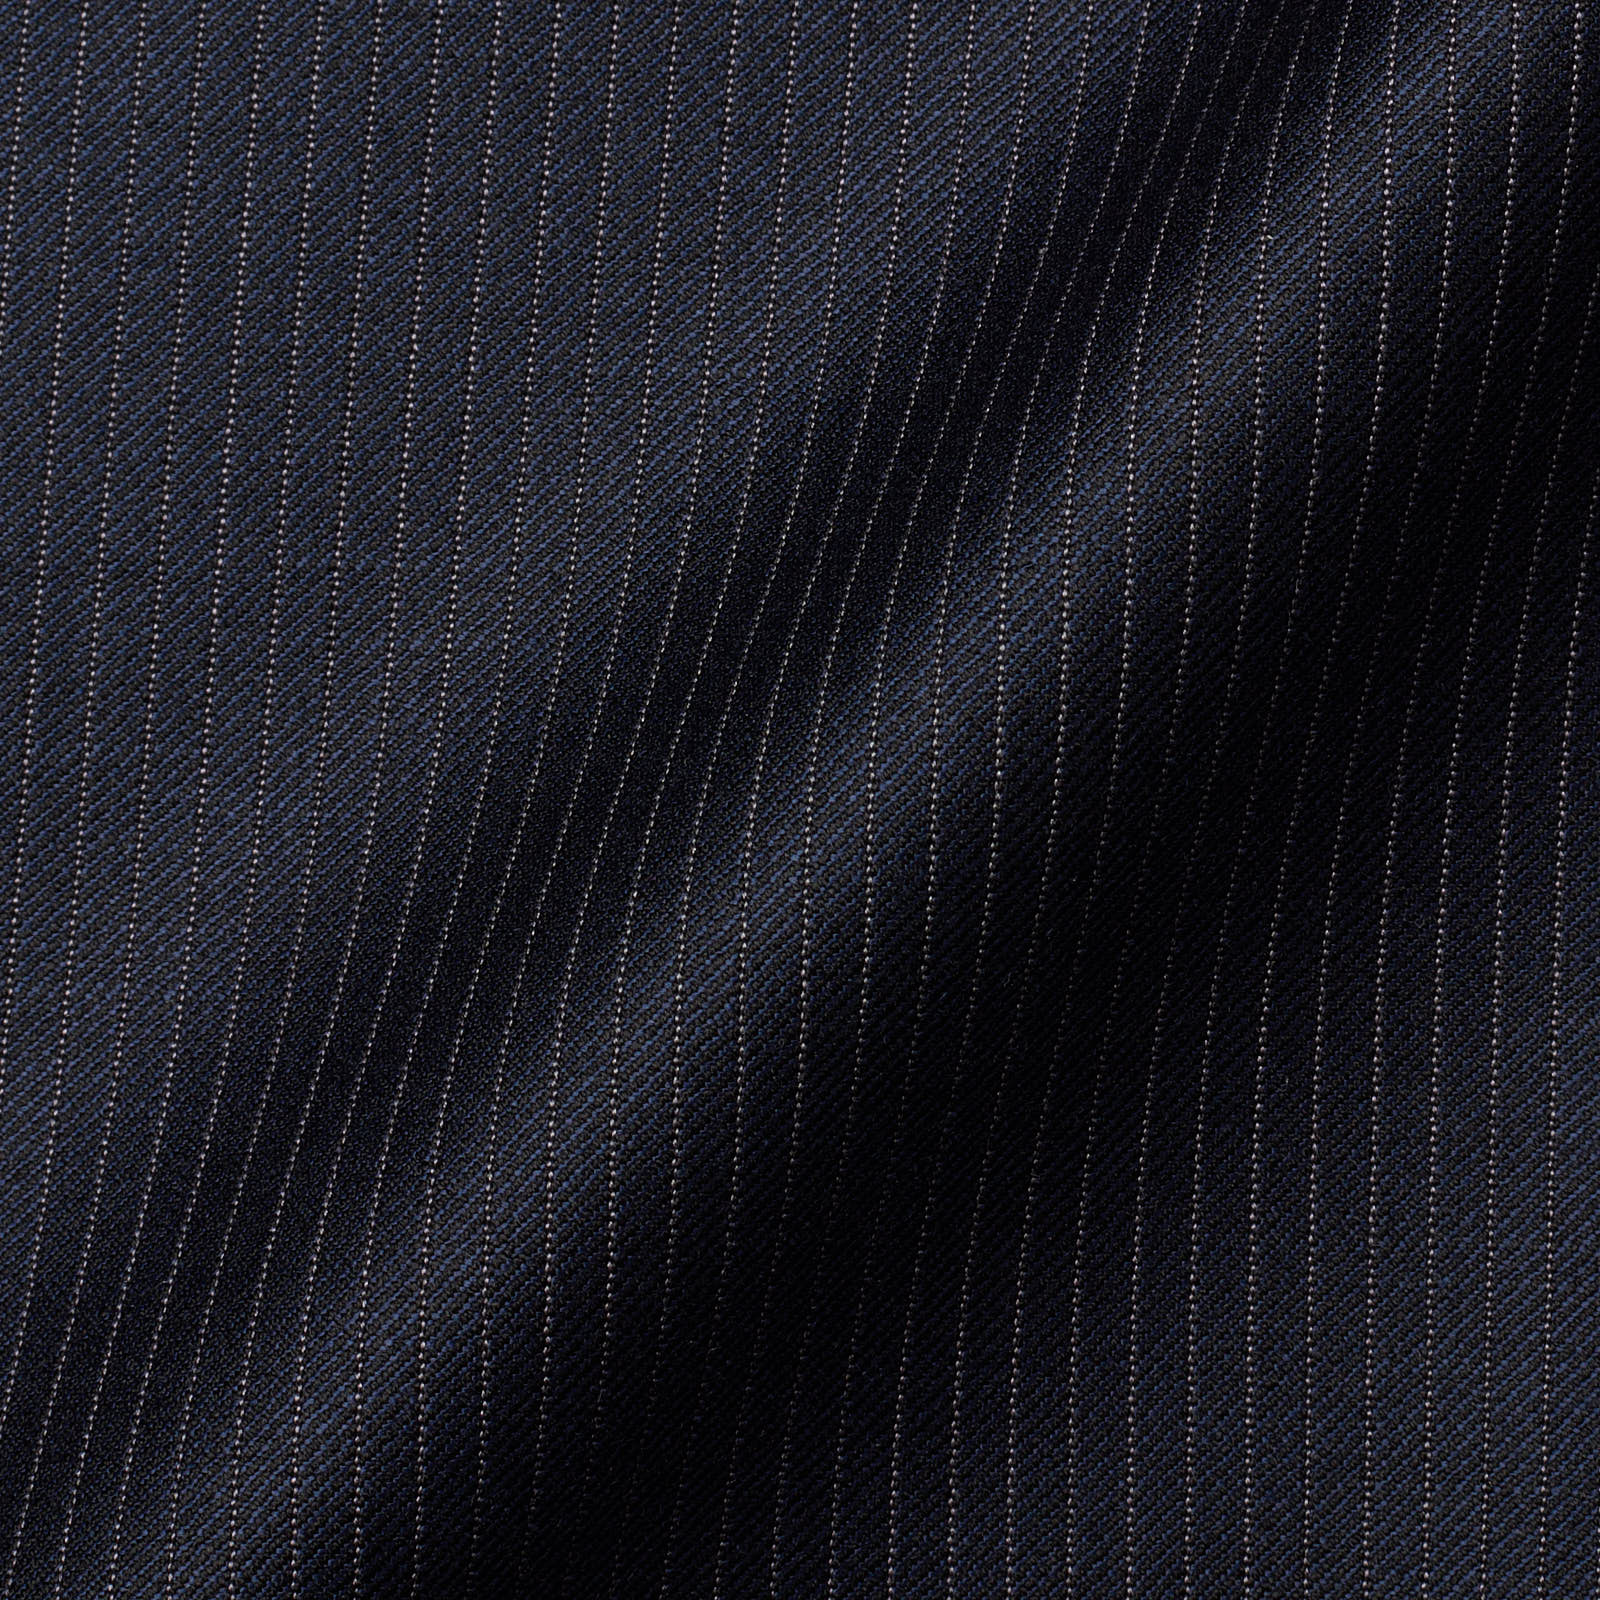 VANNUCCI Milano Navy Blue Striped Loro Piana Virgin Wool Super 150's Suit NEW